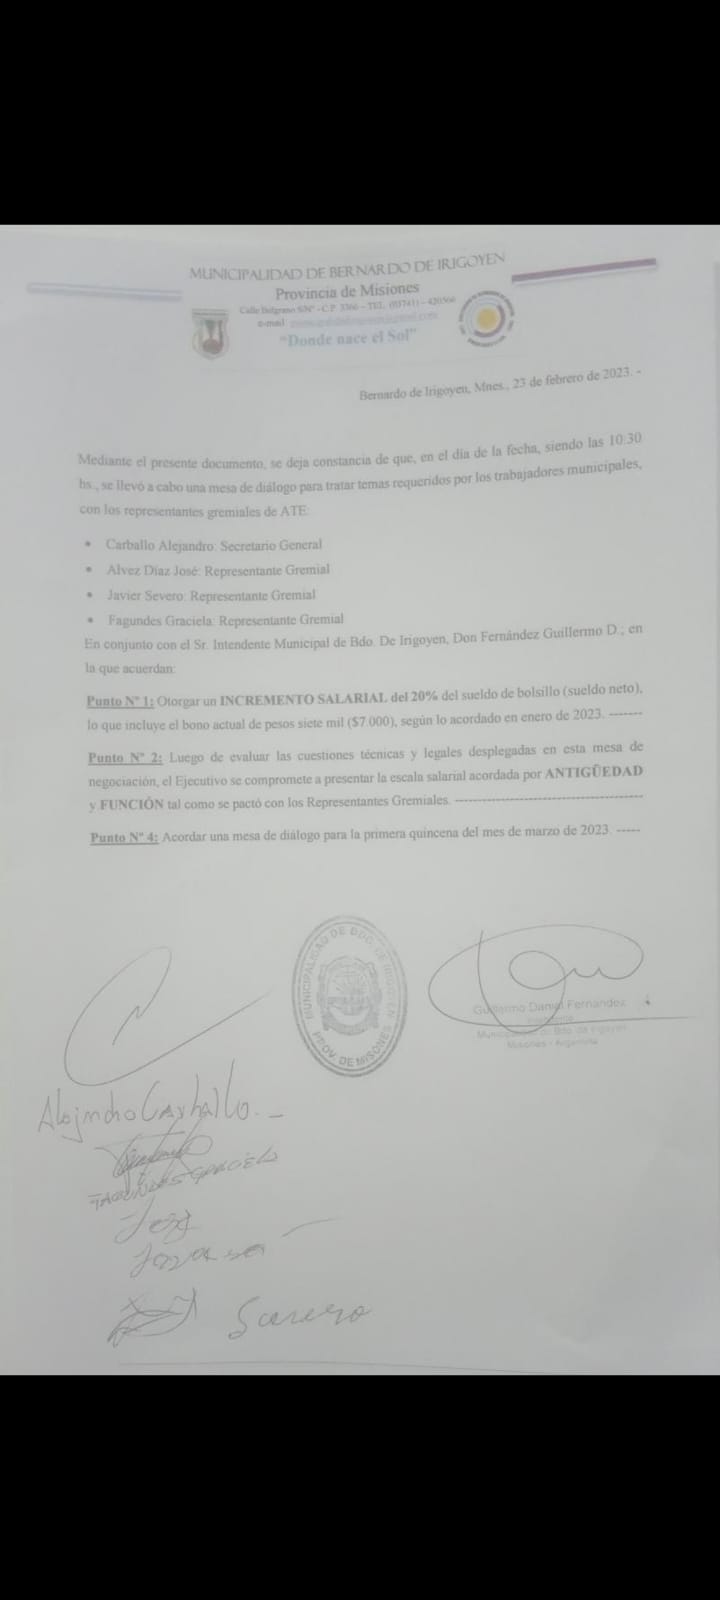 Empleados municipales de Bernardo de Irigoyen acordaron un 20% de aumento salarial imagen-7